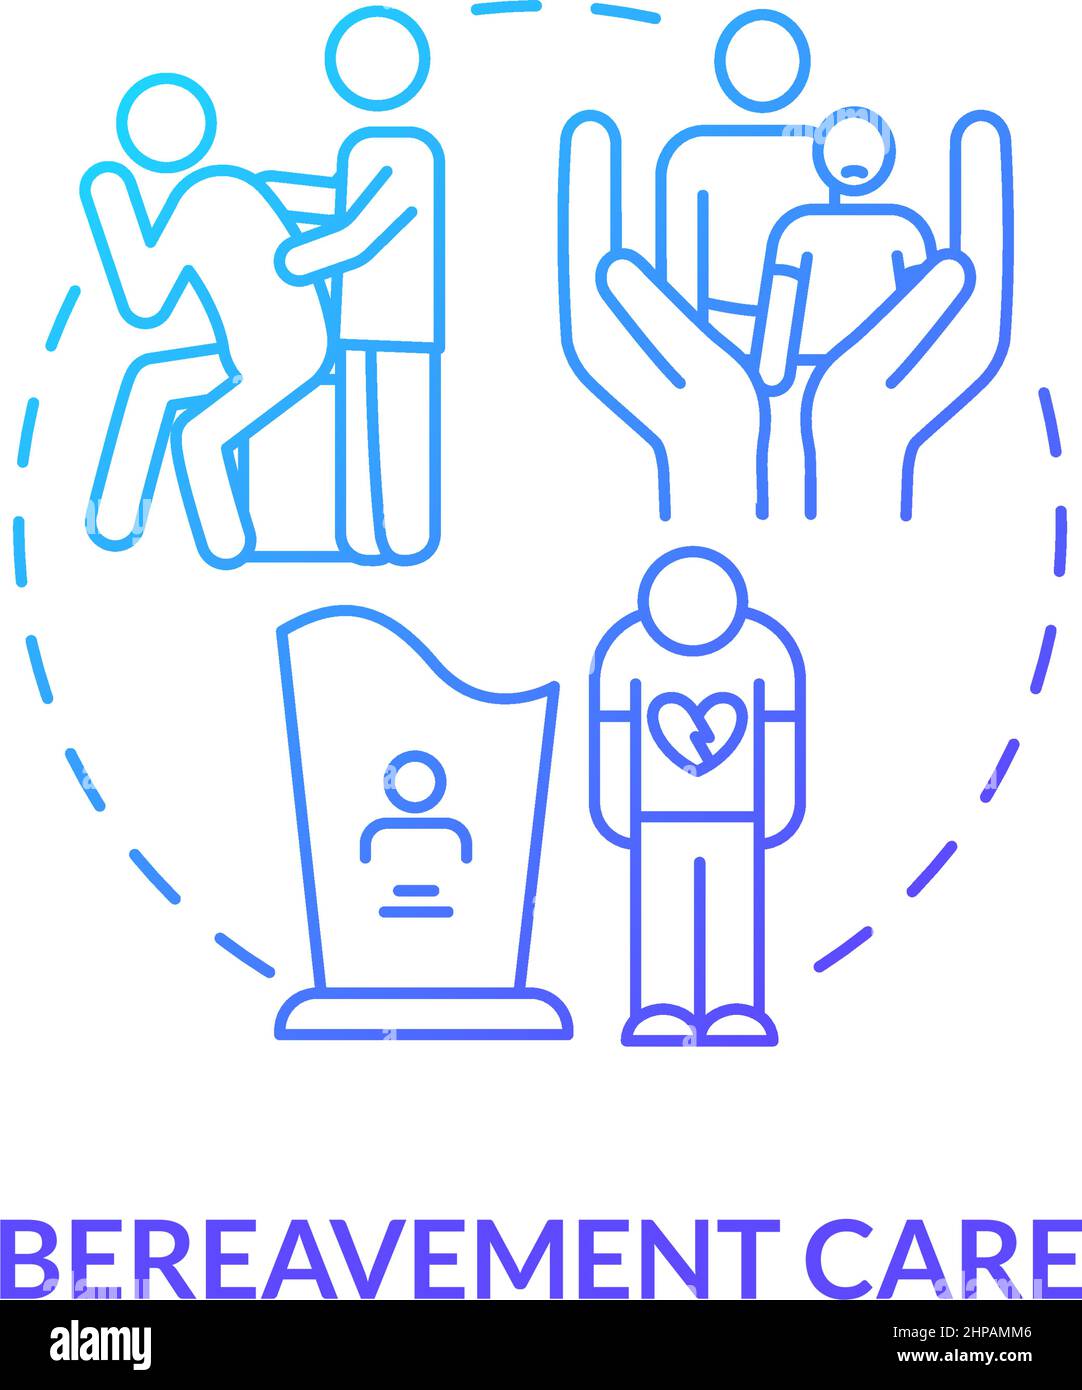 Bereavement care blue gradient concept icon Stock Vector